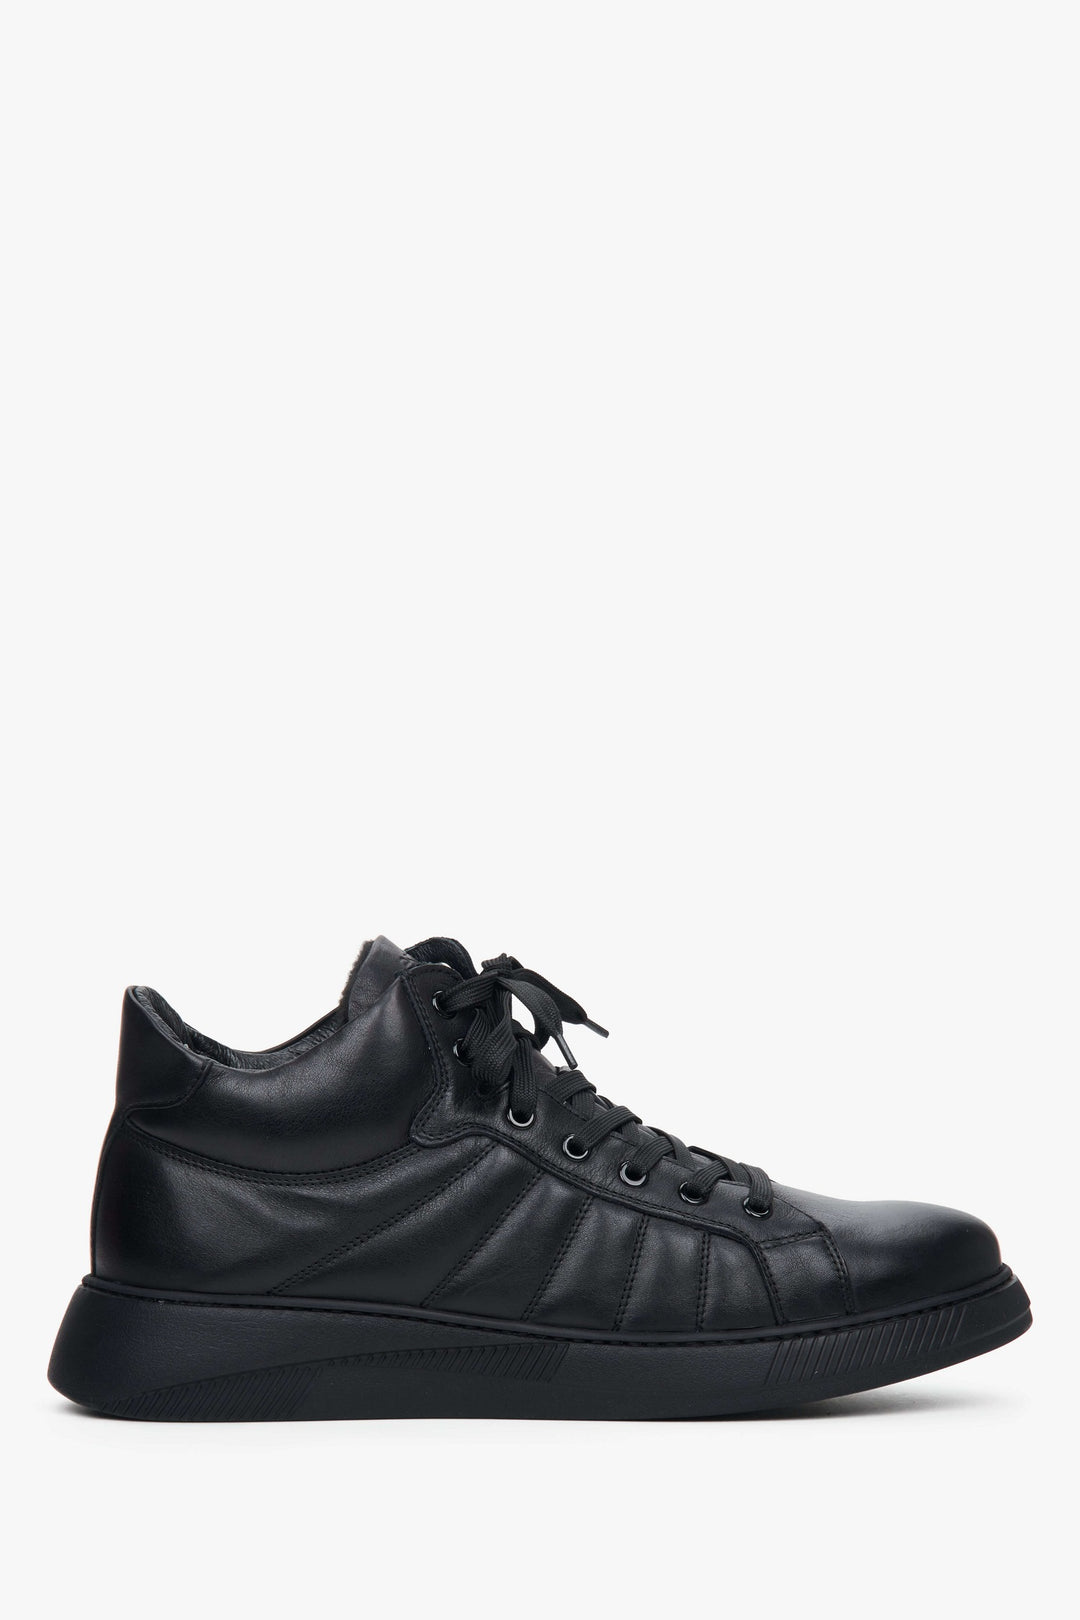 Men's Black High-top Sneakers made of Genuine Leather Estro ER00111799.